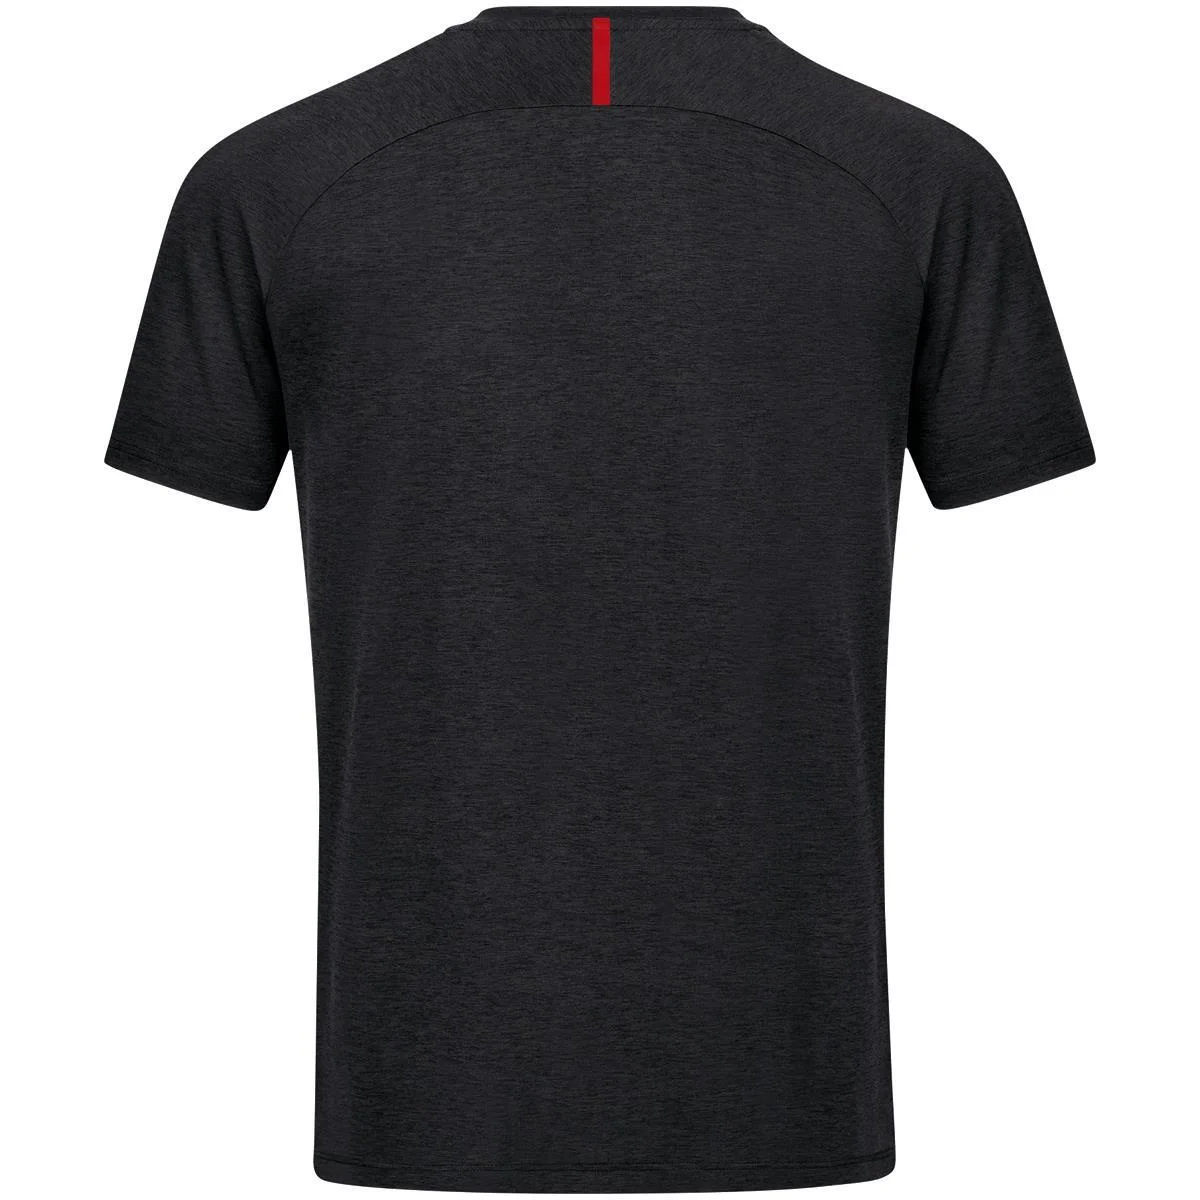 JAKO Herren T-Shirt Challenge, schwarz meliert/rot, Gr.XXL